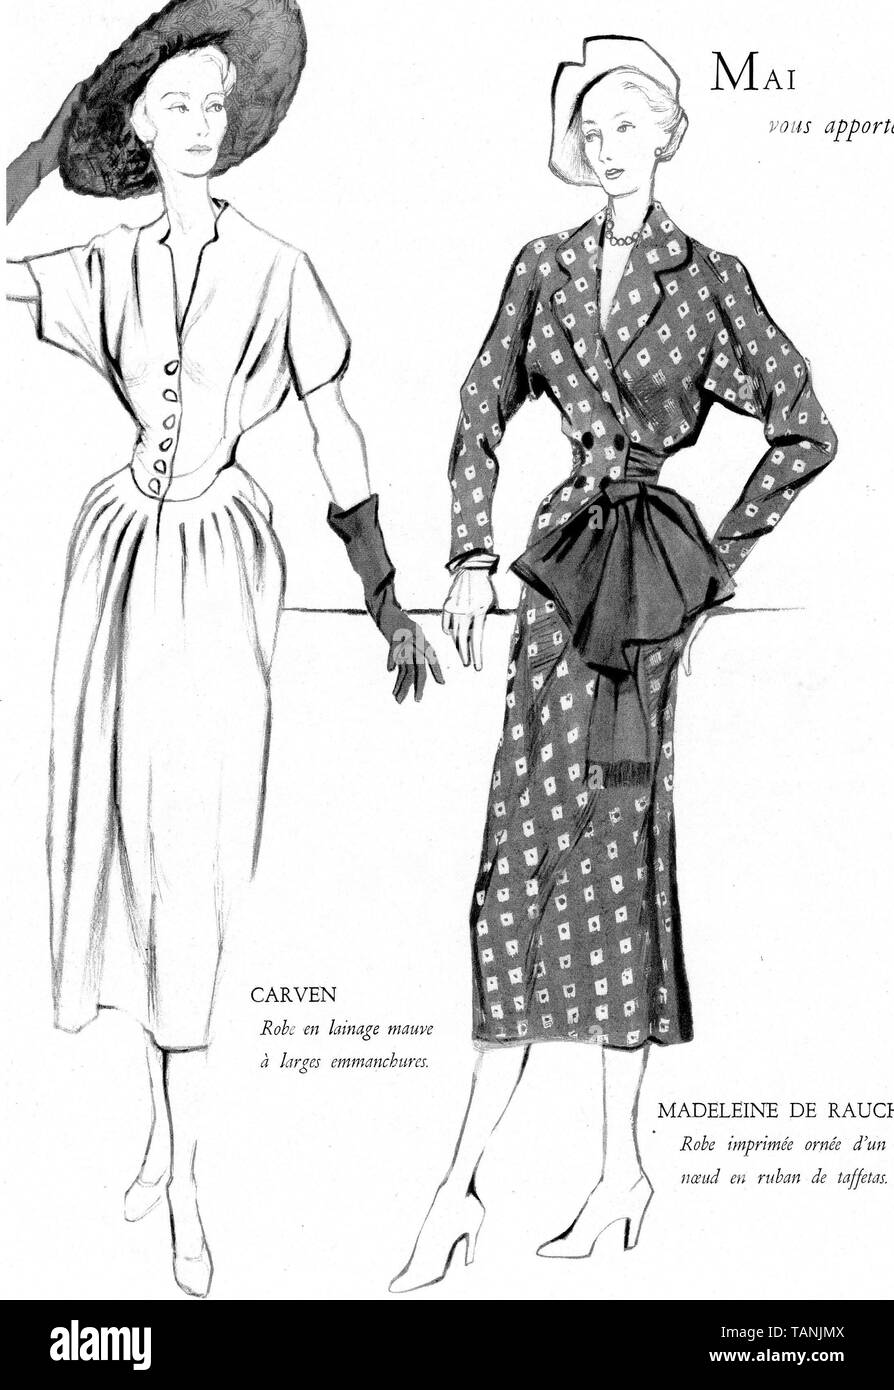 L'illustration de mode 1940 encombrement imprimer Banque D'Images